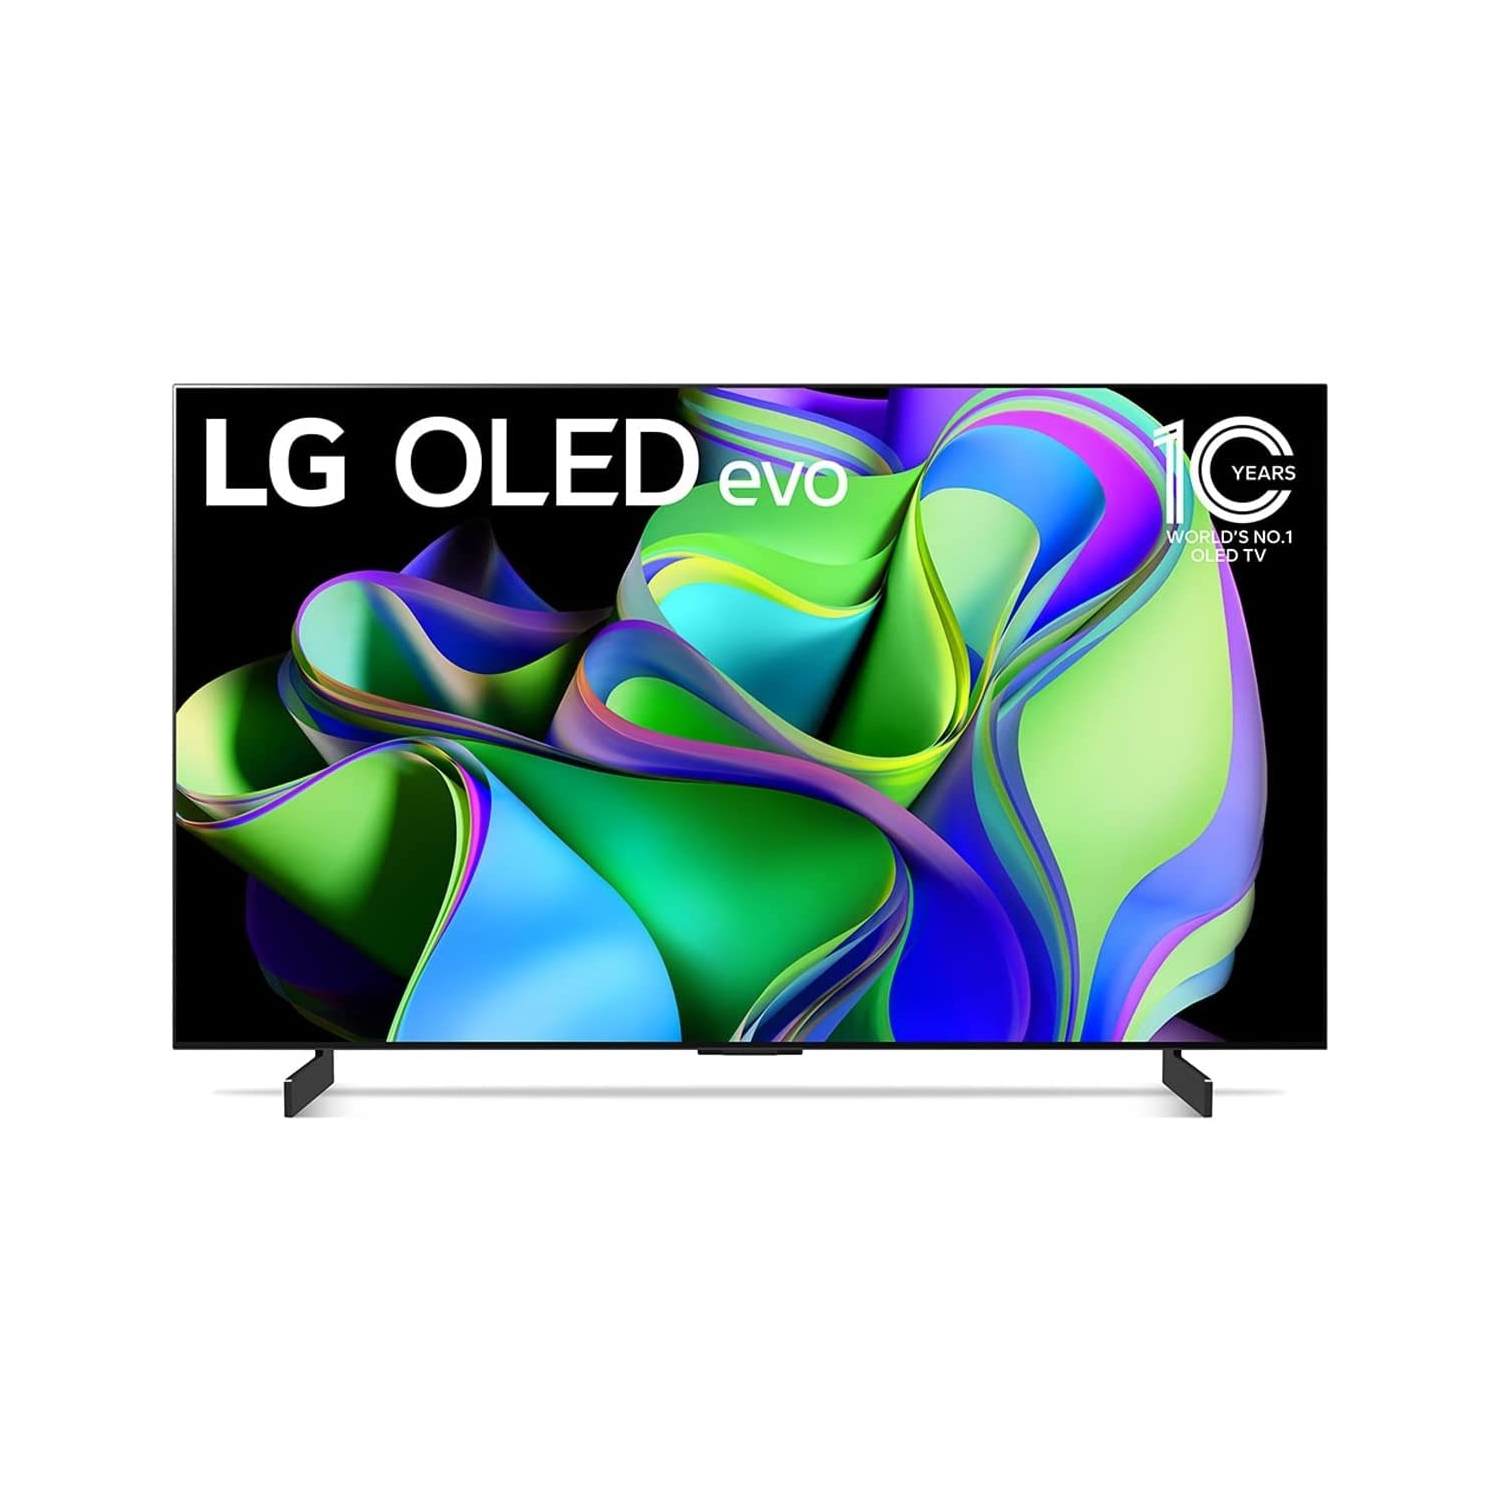 Open Box - LG C3 OLED evo 42-Inch 4K Smart TV - AI-Powered, Alexa Built-in, Gaming, 120Hz Refresh, HDMI 2.1, FreeSync, G-sync, VRR, WebOS, Slim Design, 42" Television